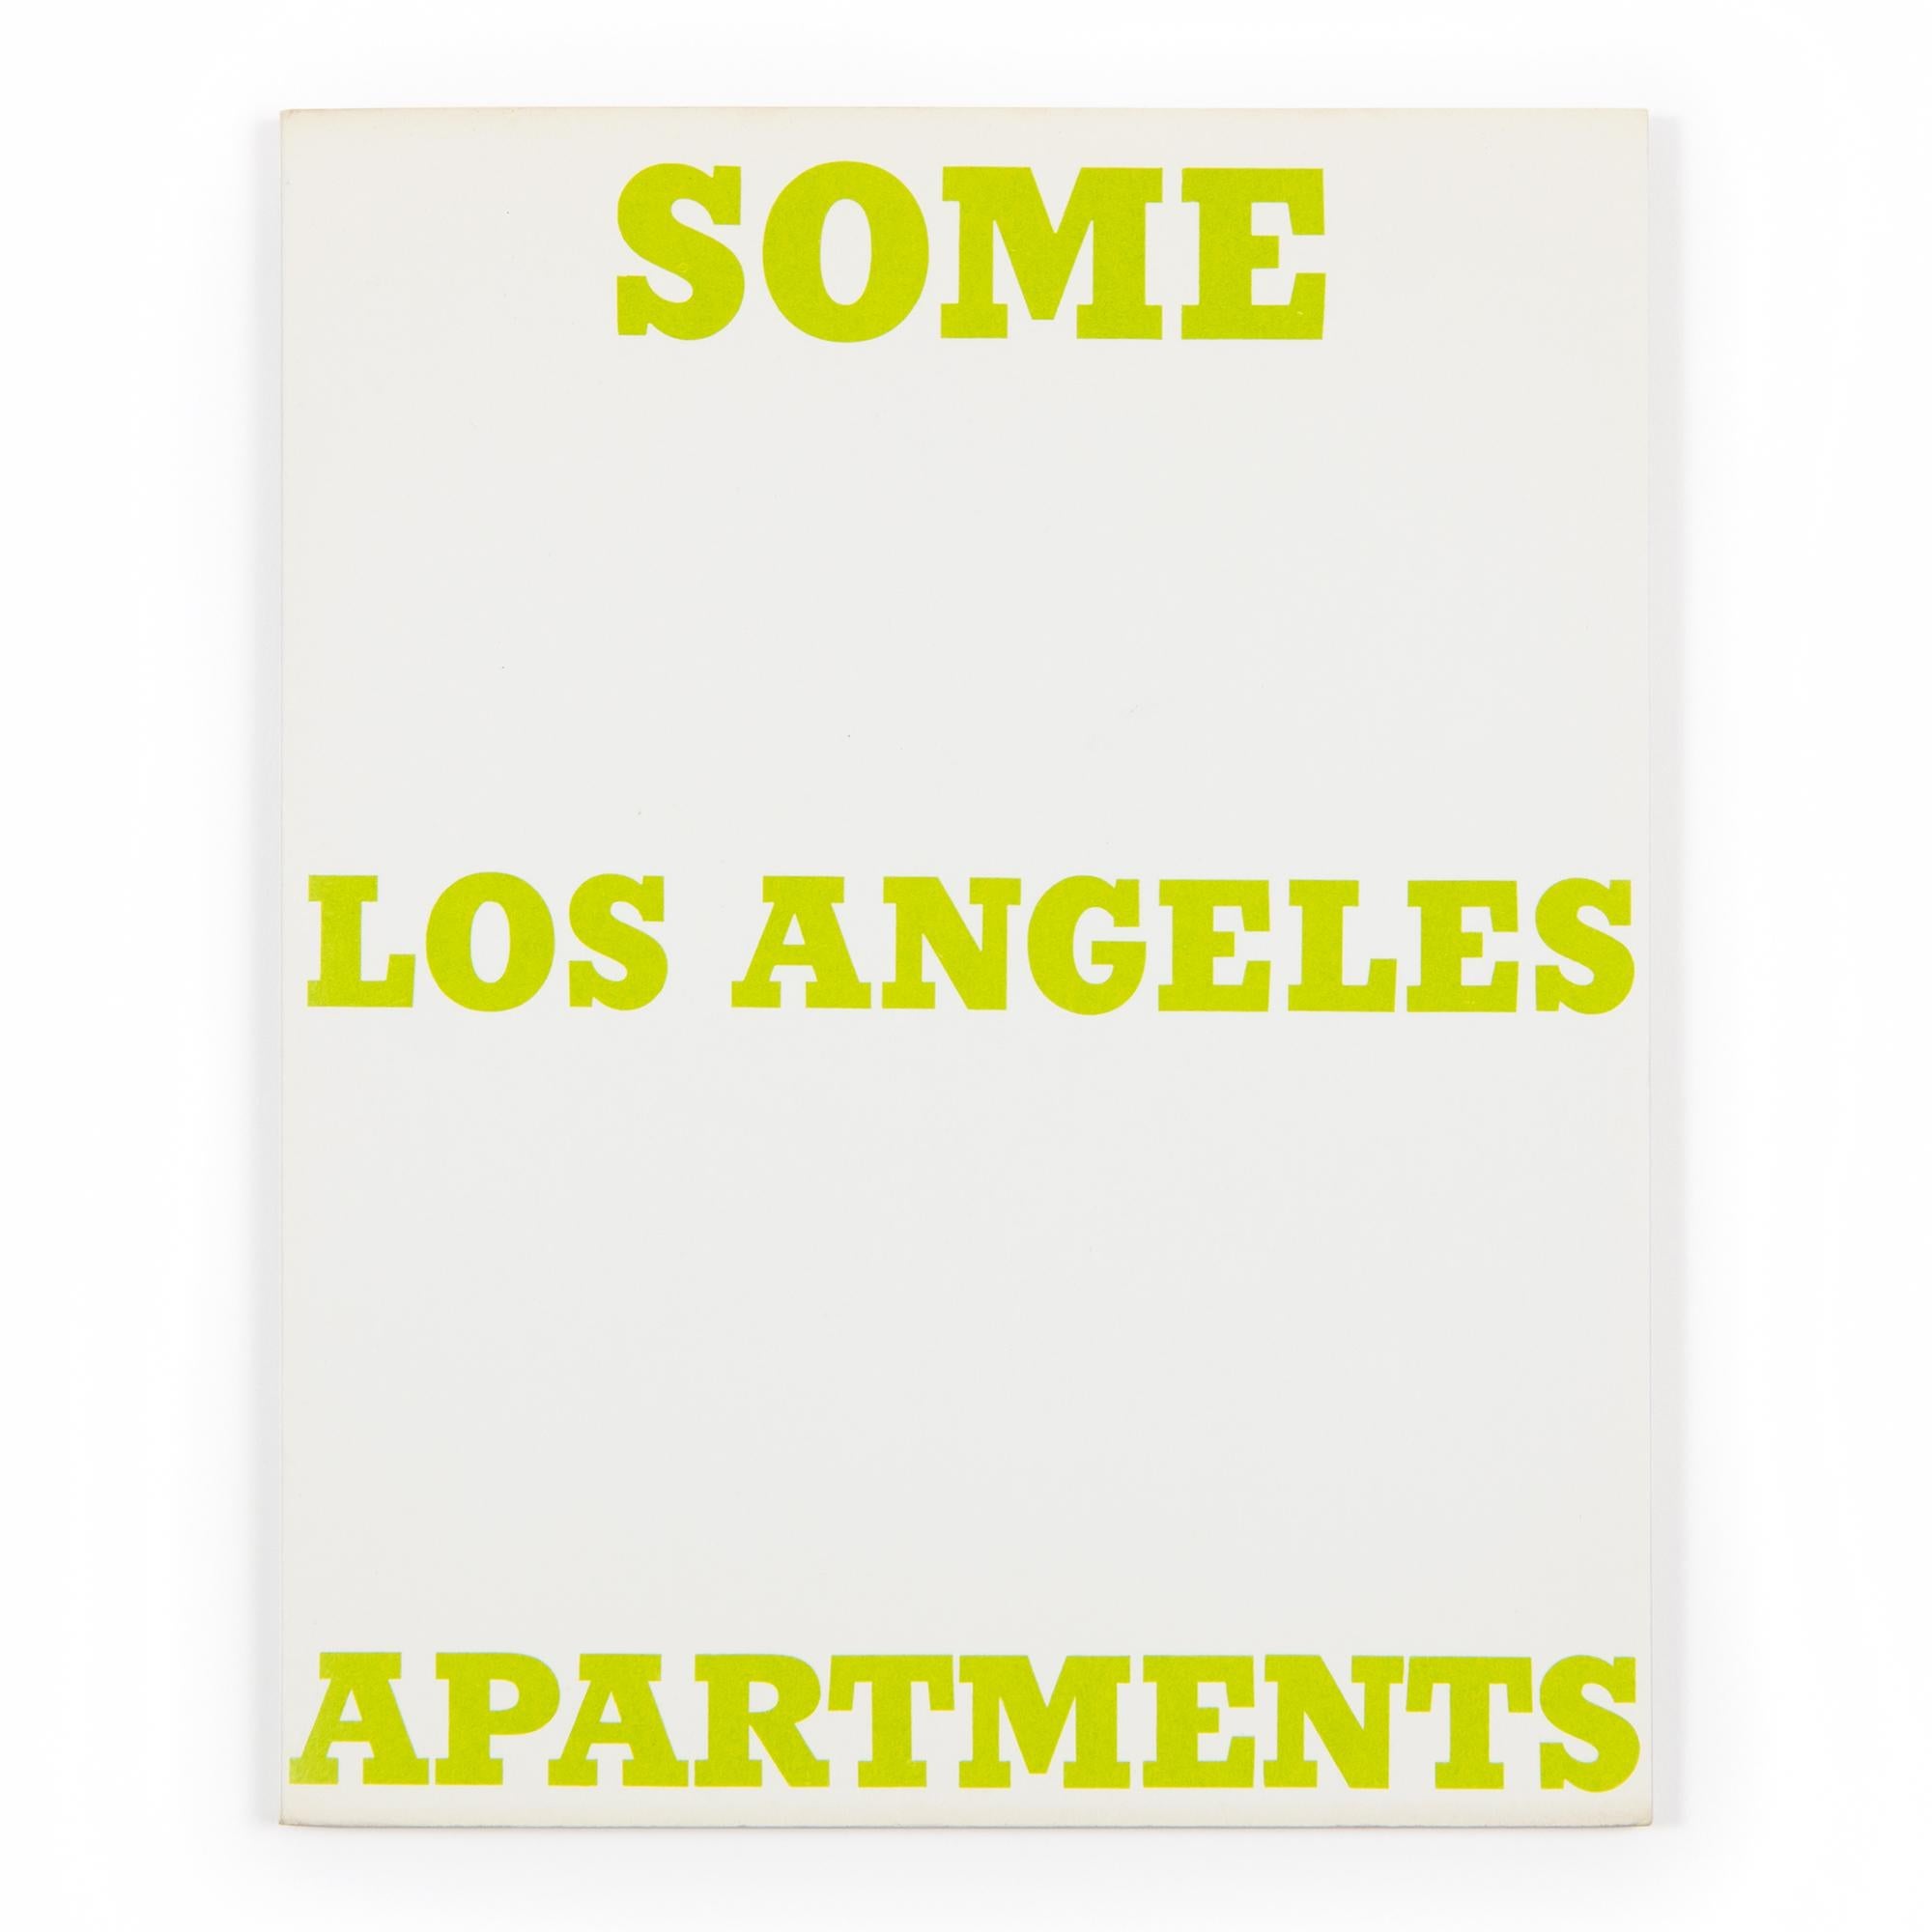 Ed Ruscha (American, b.1937)
Some Los Angeles Apartments, 1965/1970
Medium: Artist’s book (black offset printing on 100 lb. white Vicksburg Vellum text paper)
Dimensions: 17.8 x 14 x 0.5 cm (7 x 5 1/2 x 3/16 in)
Edition size: 3000 (2nd